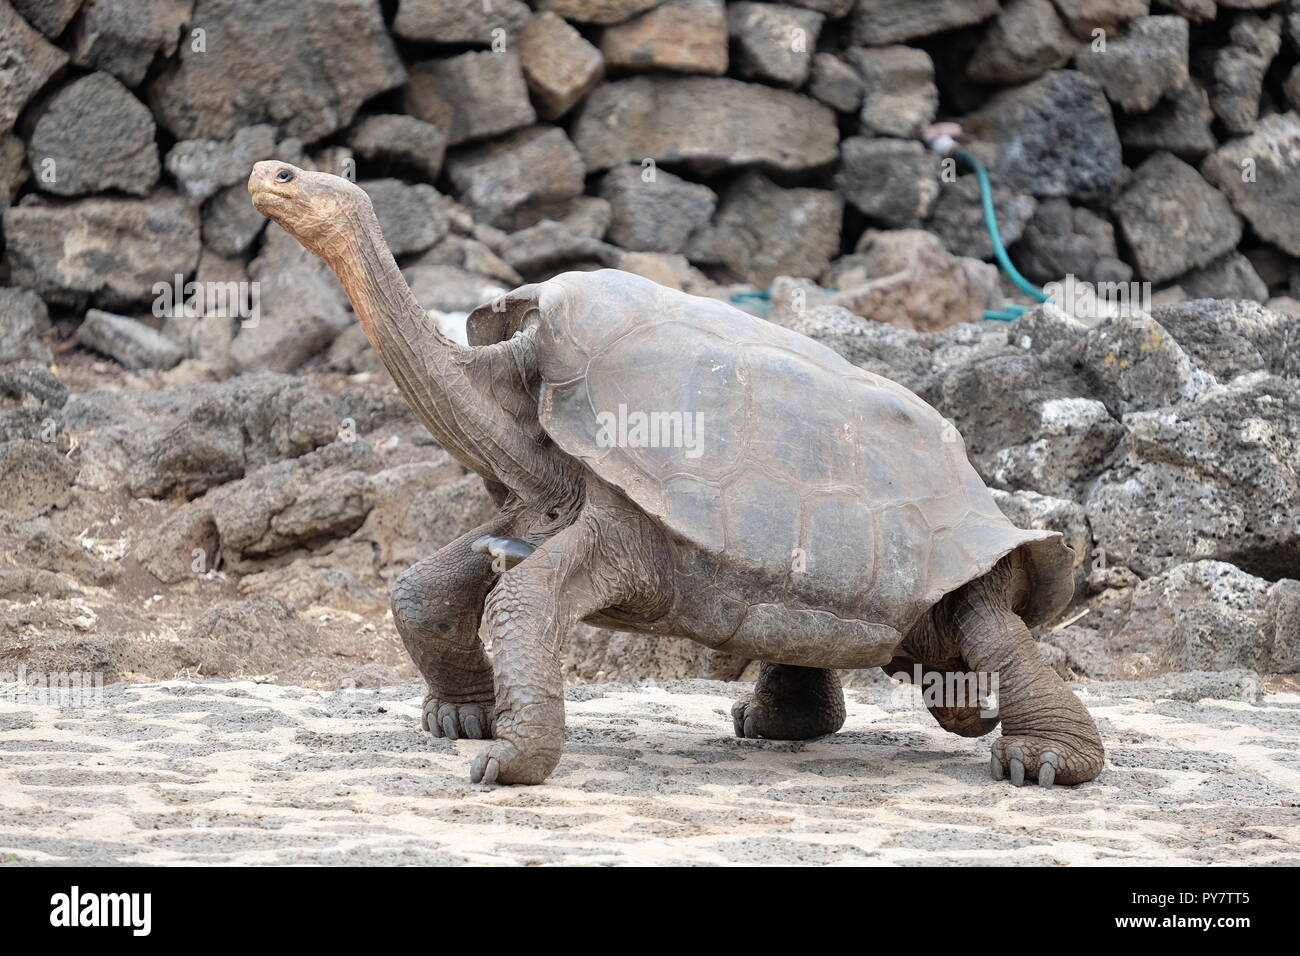 Giant long-neck tortoise walking, Charles Darwin Centre, Galapagos Islands Stock Photo